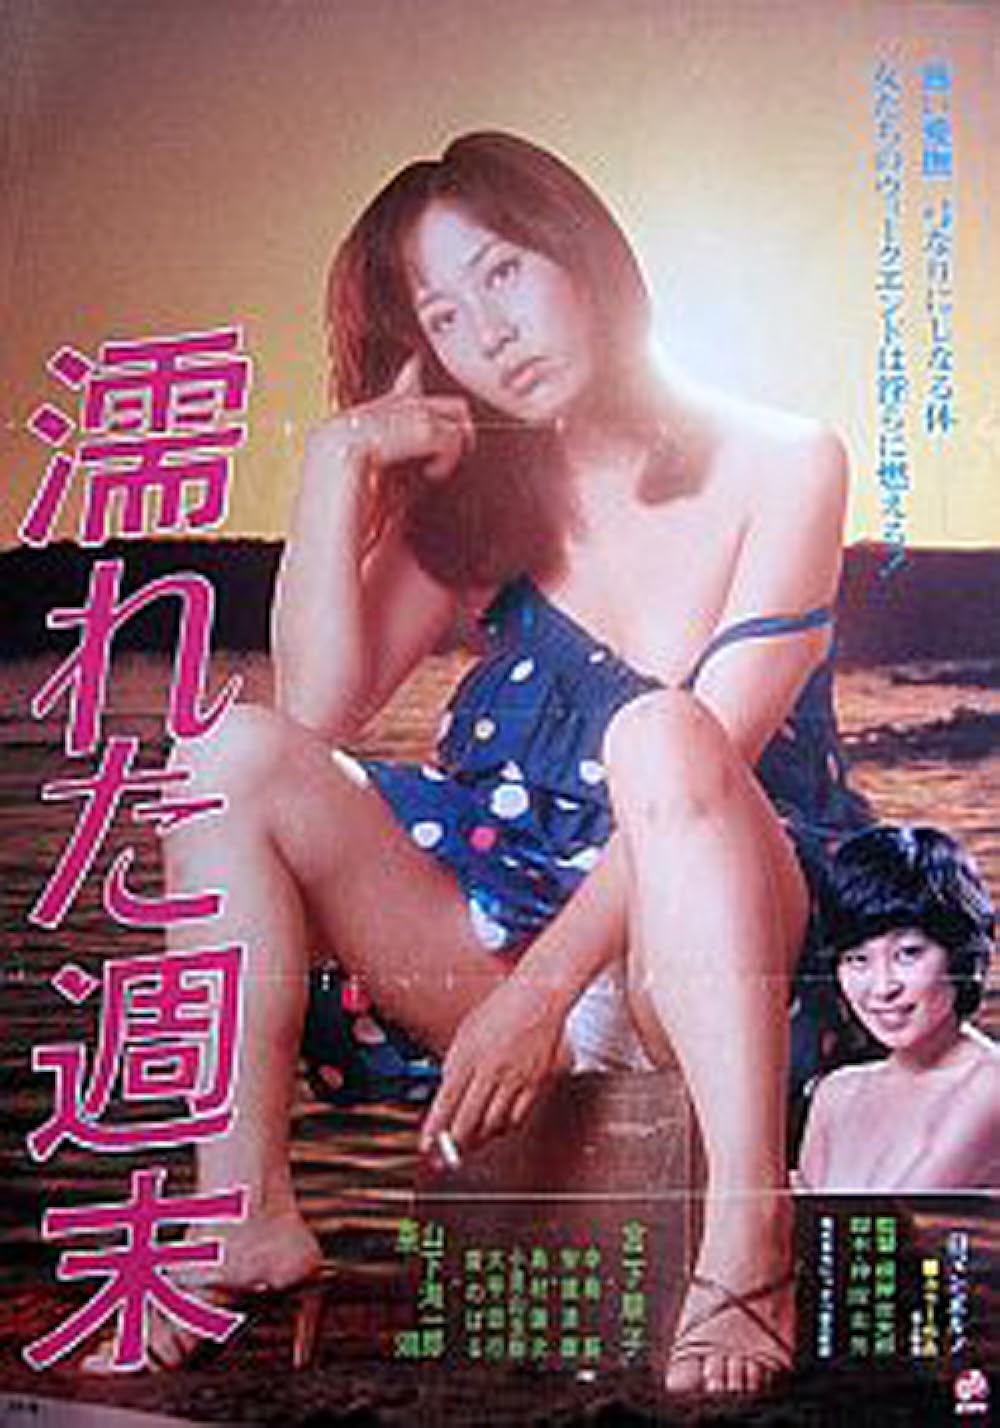 18+ Wet Weekend 1979 Japanese 480p HDRip 250MB Download